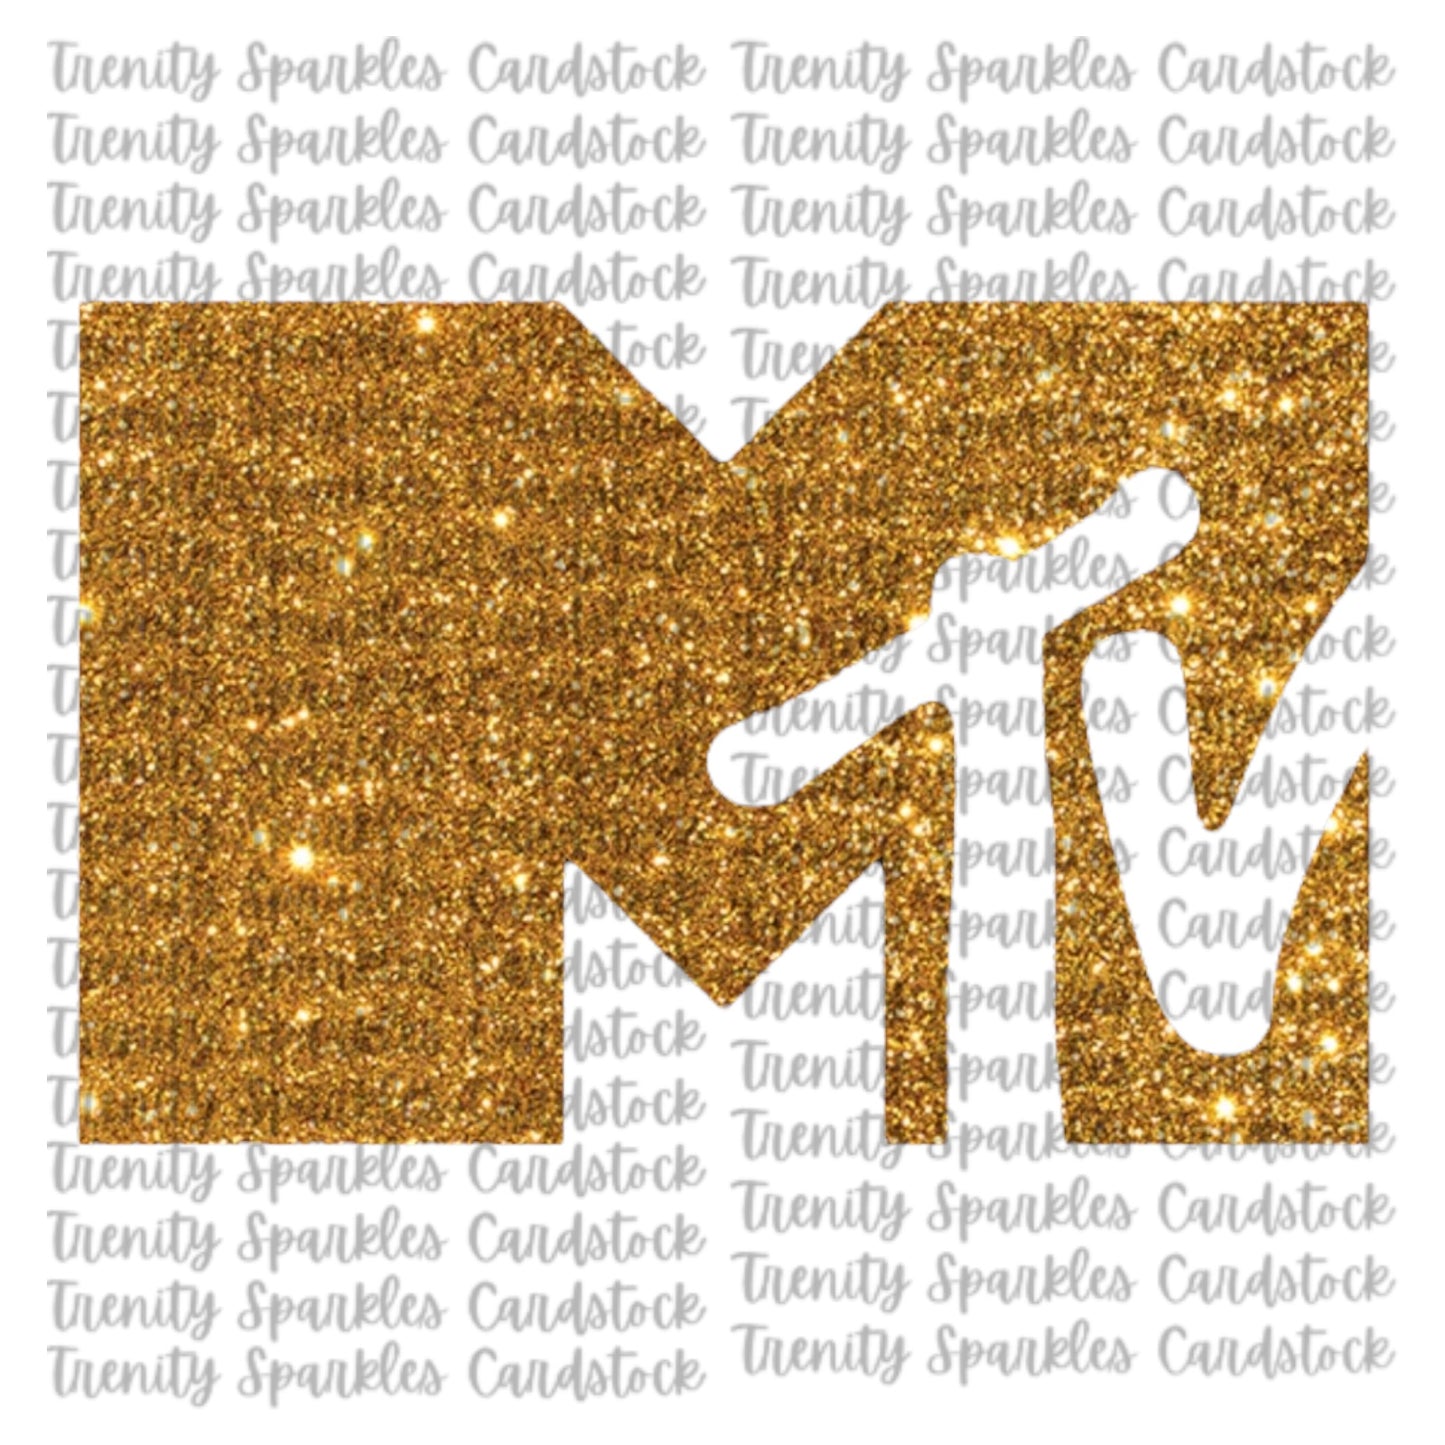 TB Molds MTV Cardstock